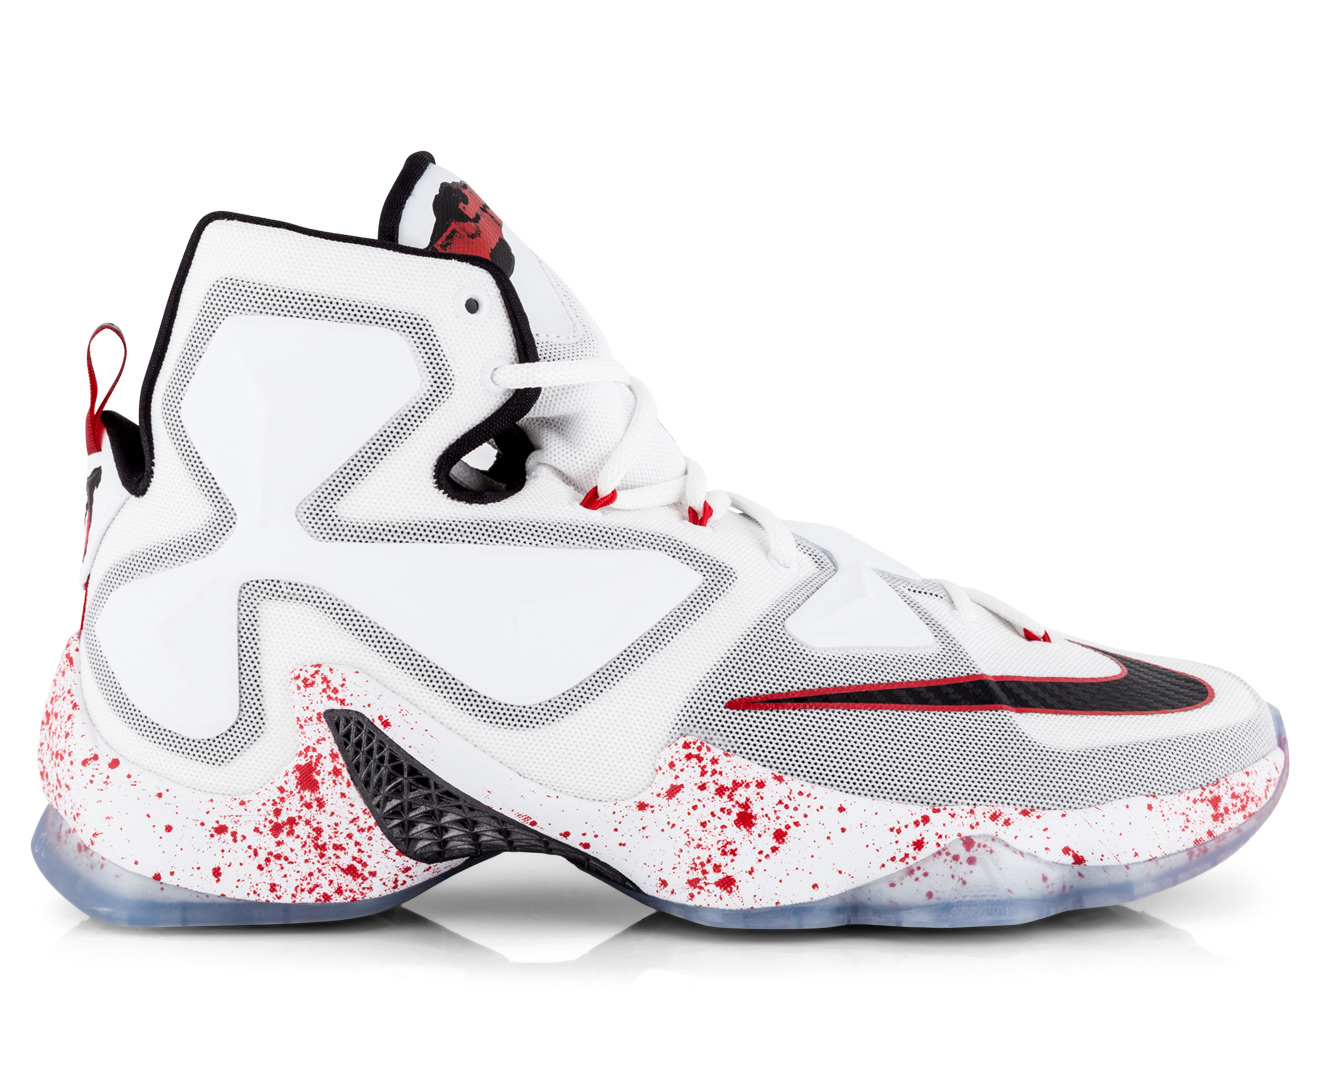 Nike Men's Lebron XIII Basketball Shoe - White/Black/University Red